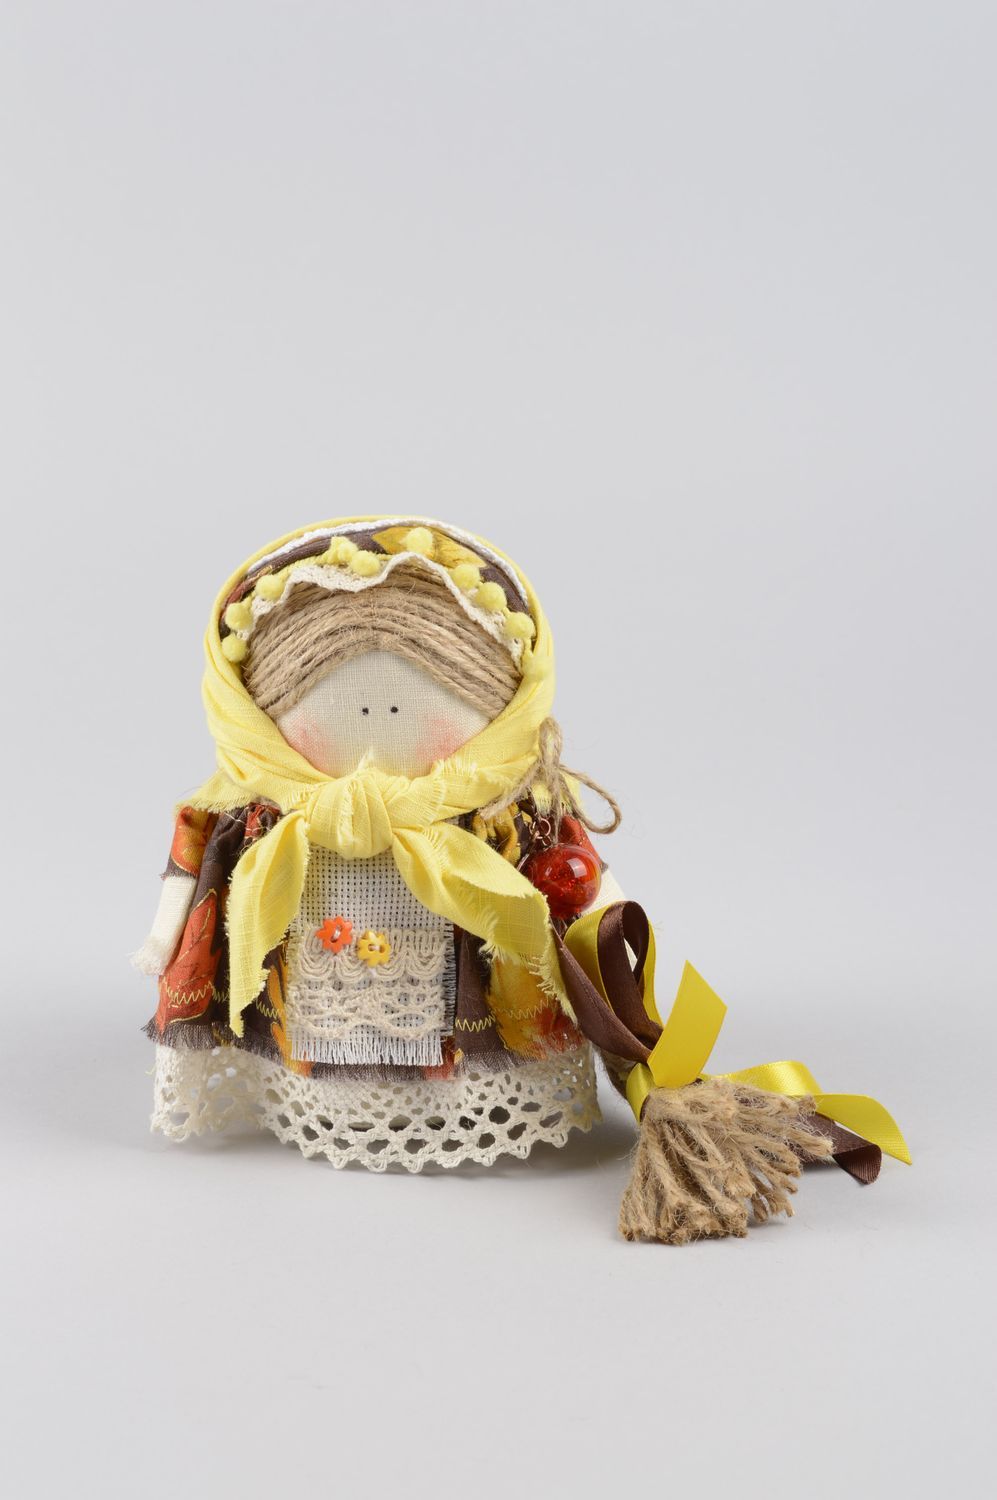 Handmade doll designer doll decorative use only gift ideas interior decor photo 1